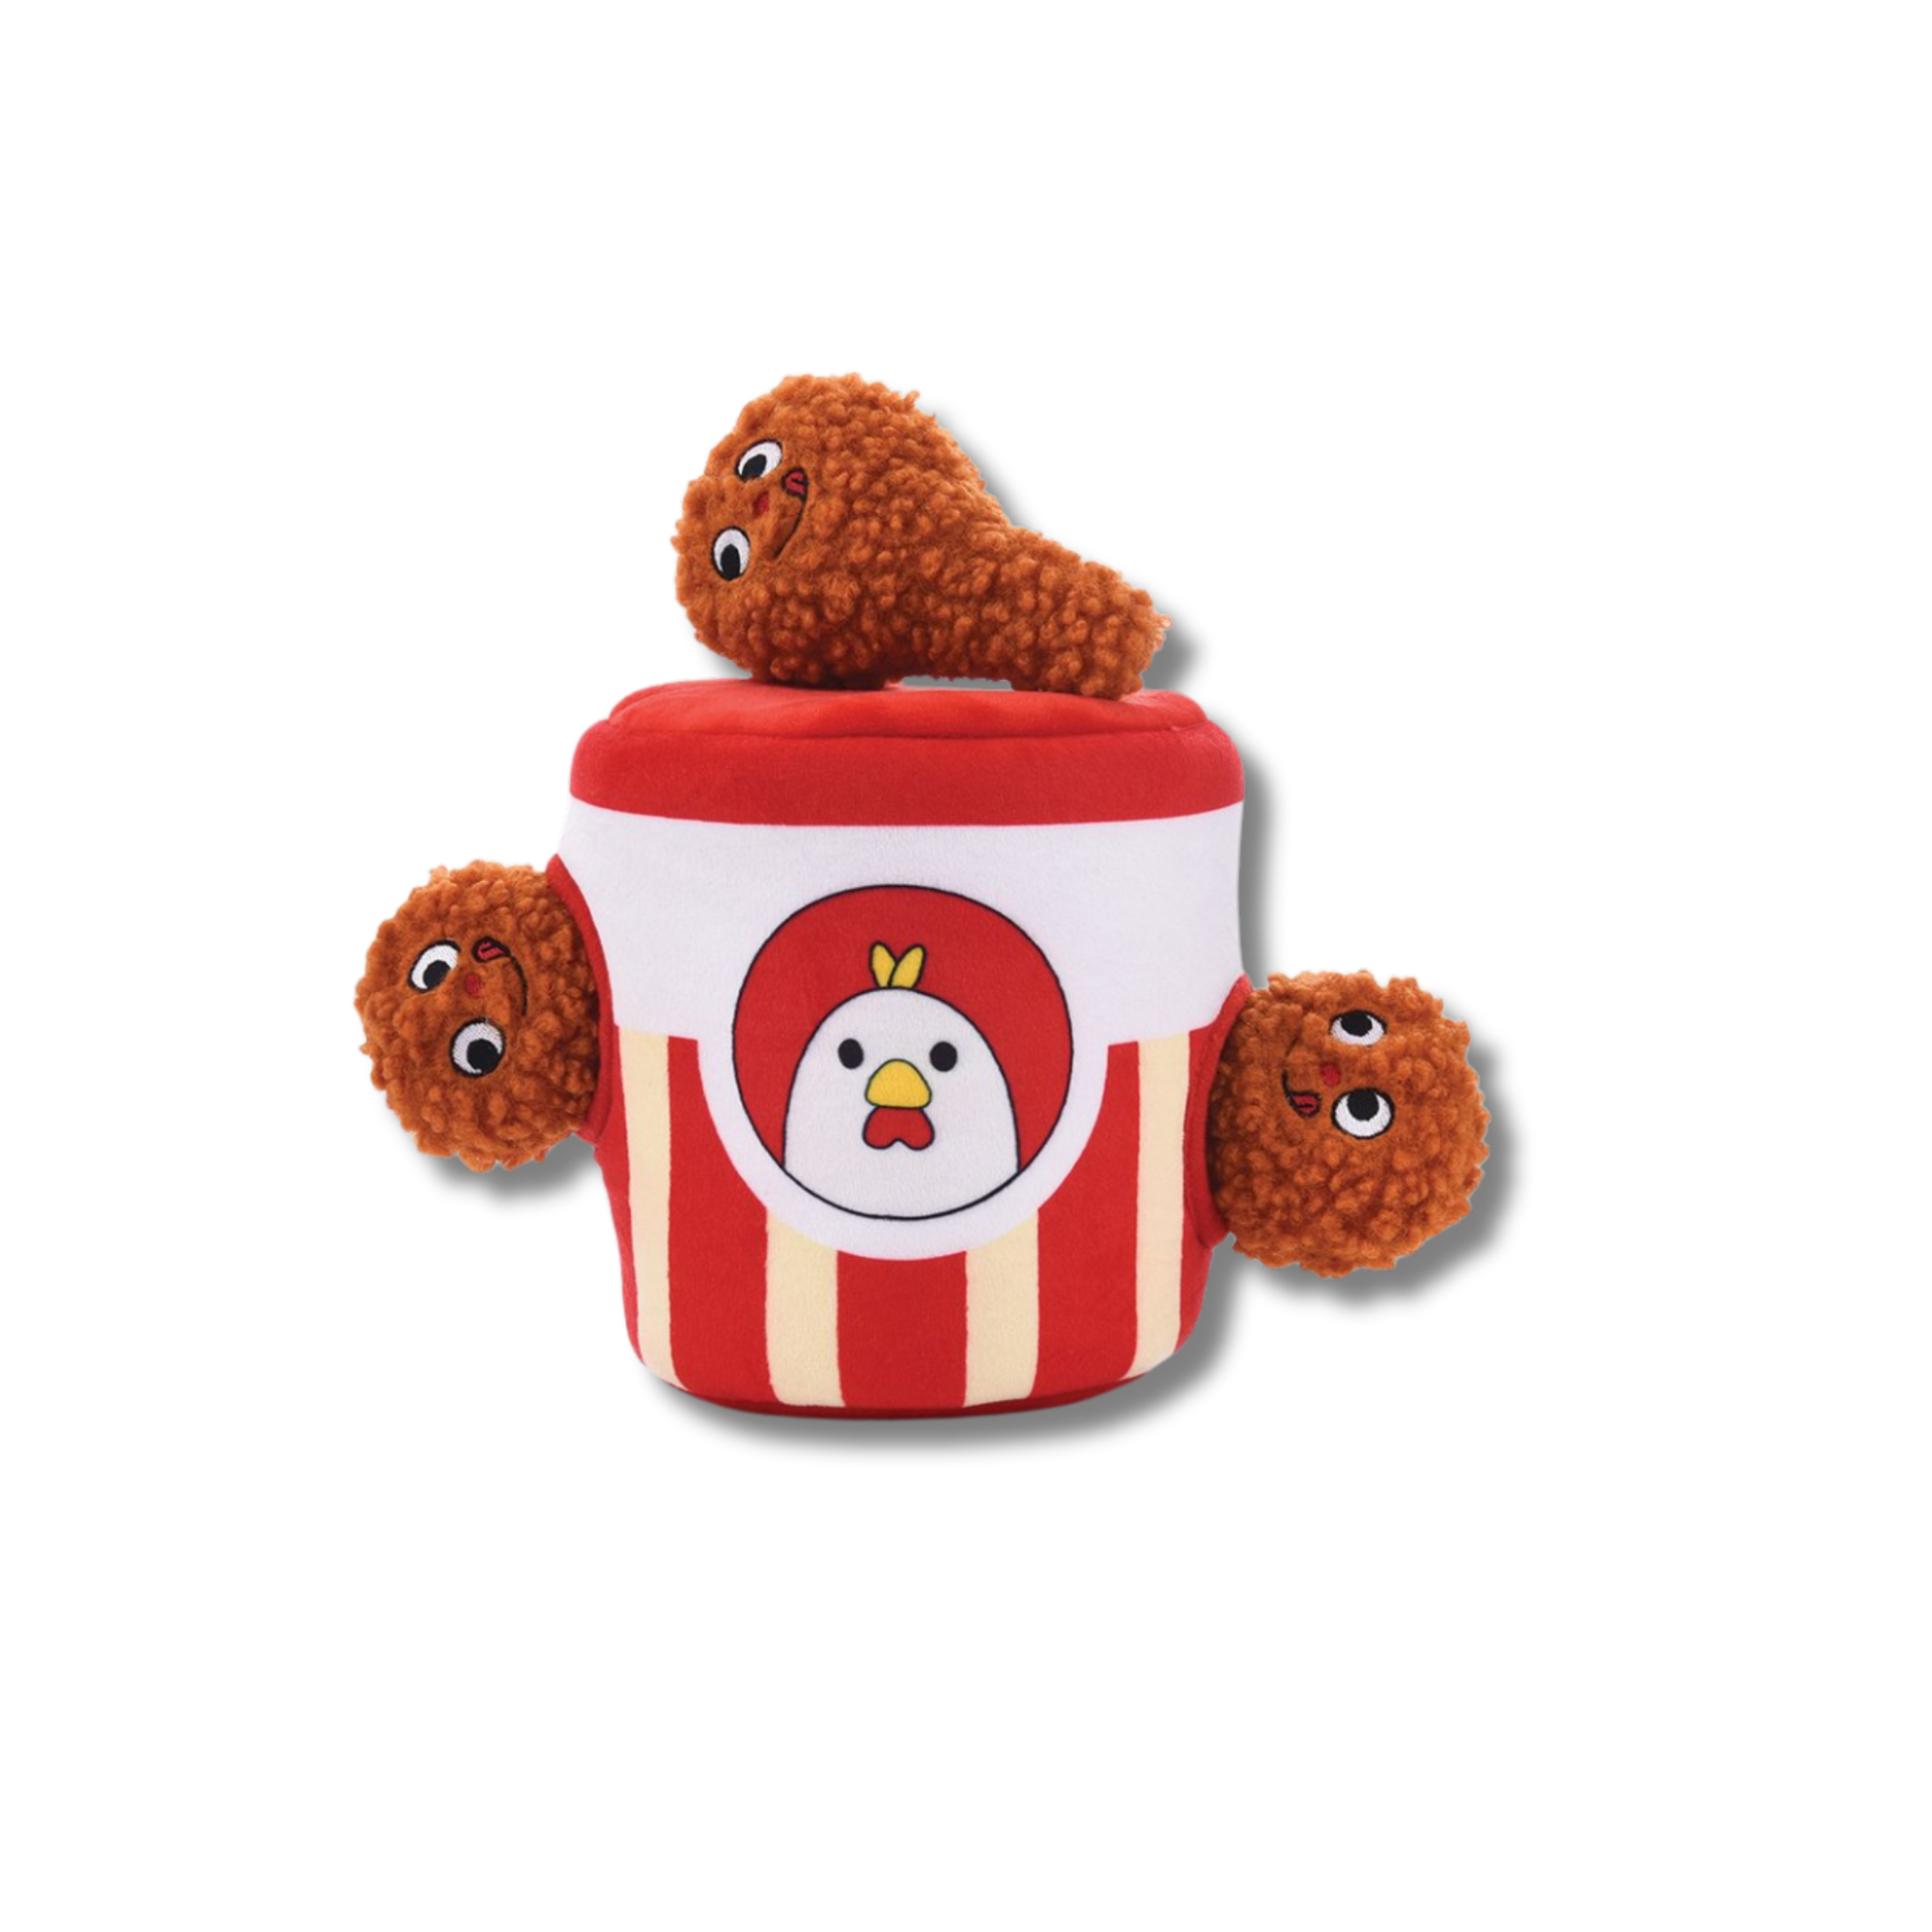 Fried chicken hidden pet plush toy - Reggie and Friends